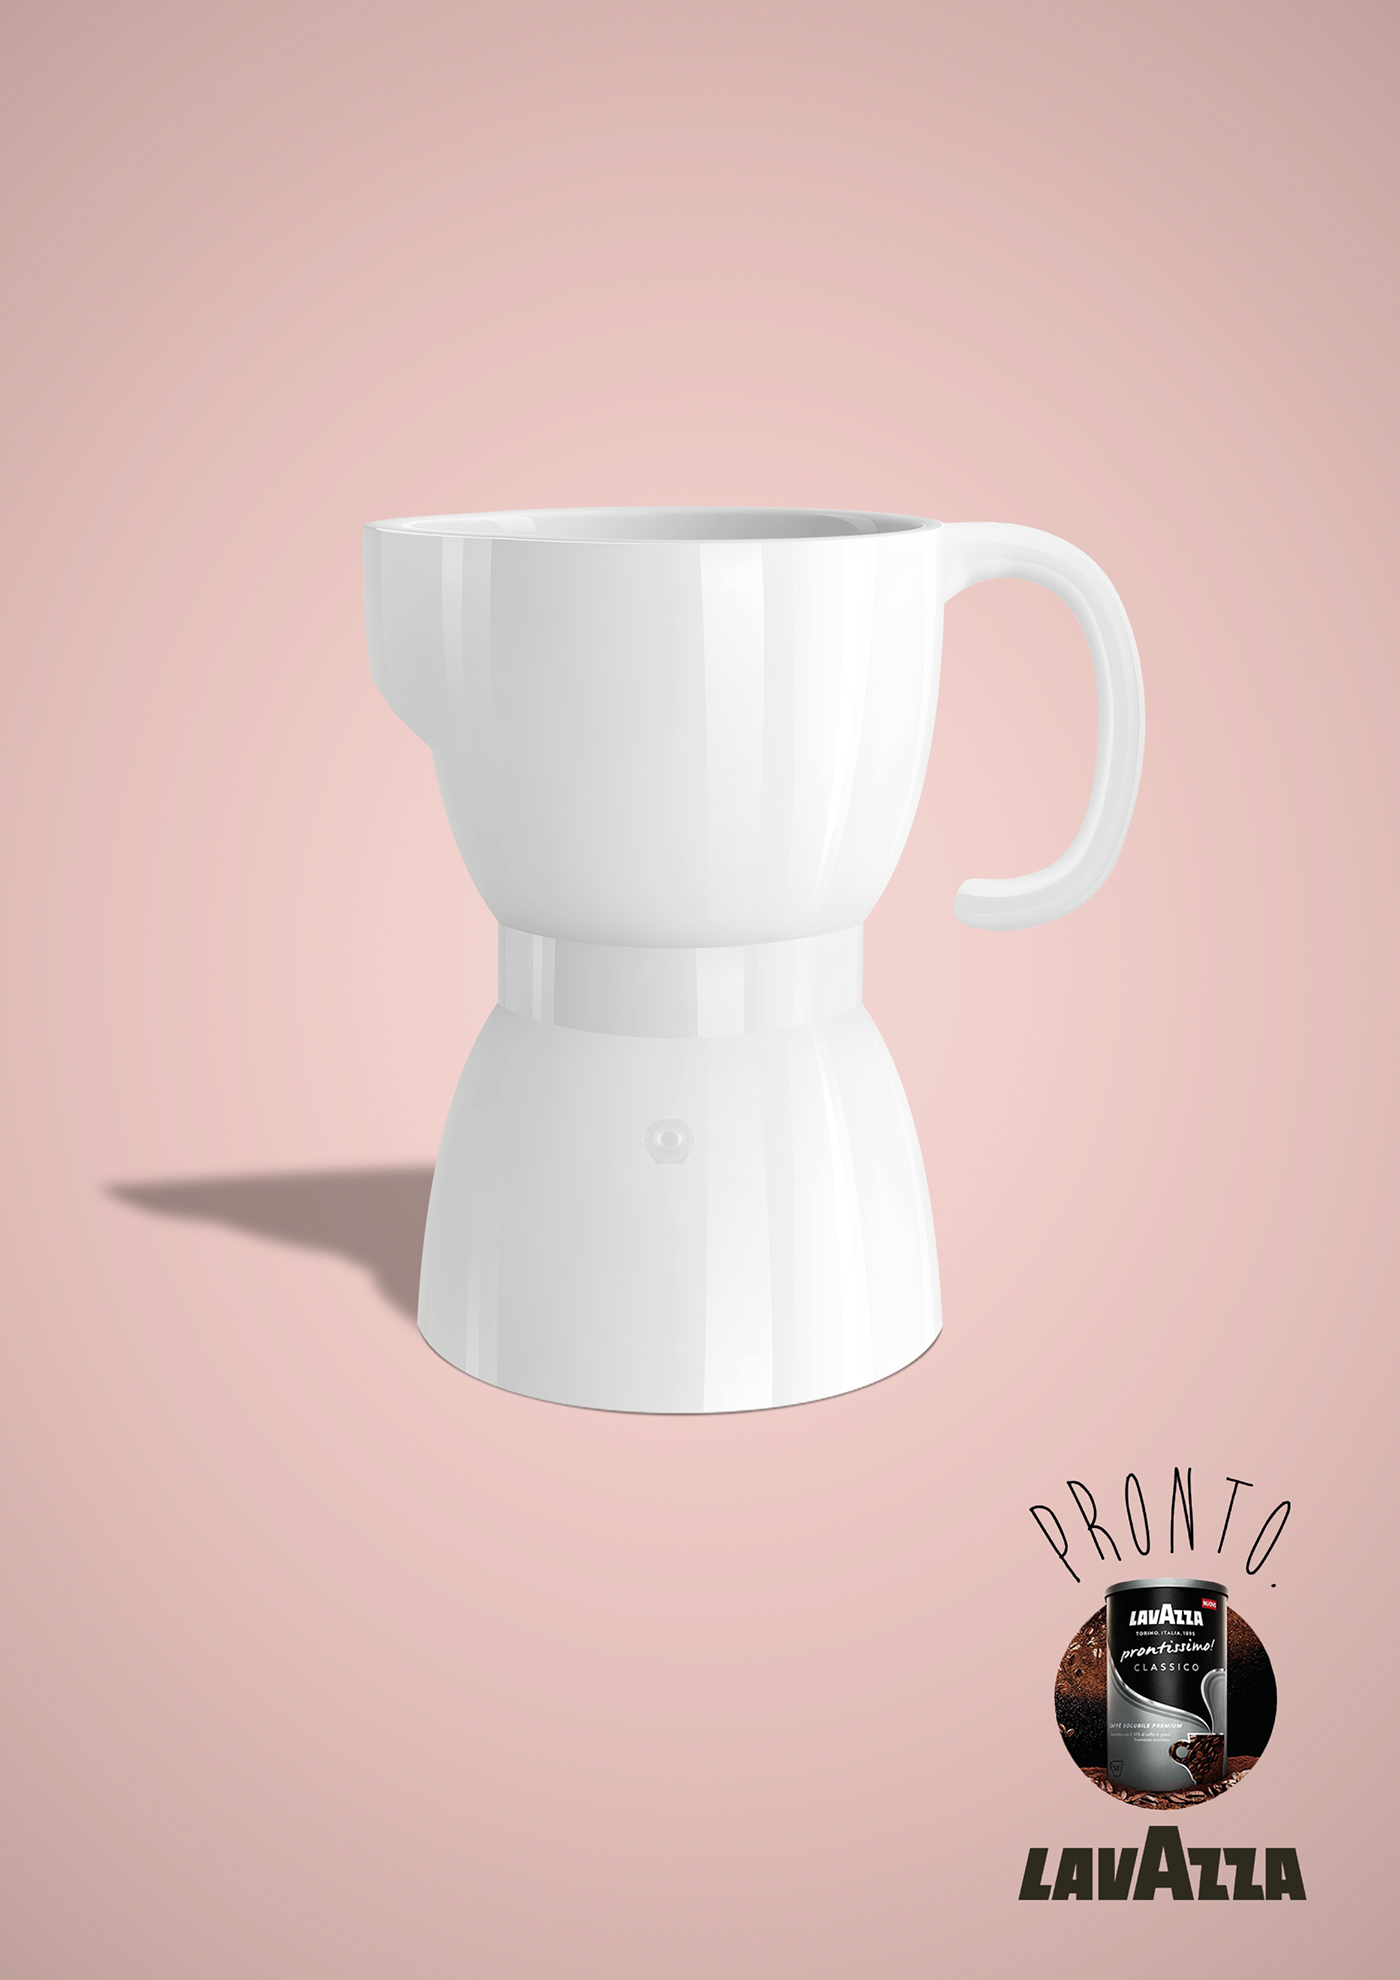 Advertising  Coffee Mug  Lavazza italian